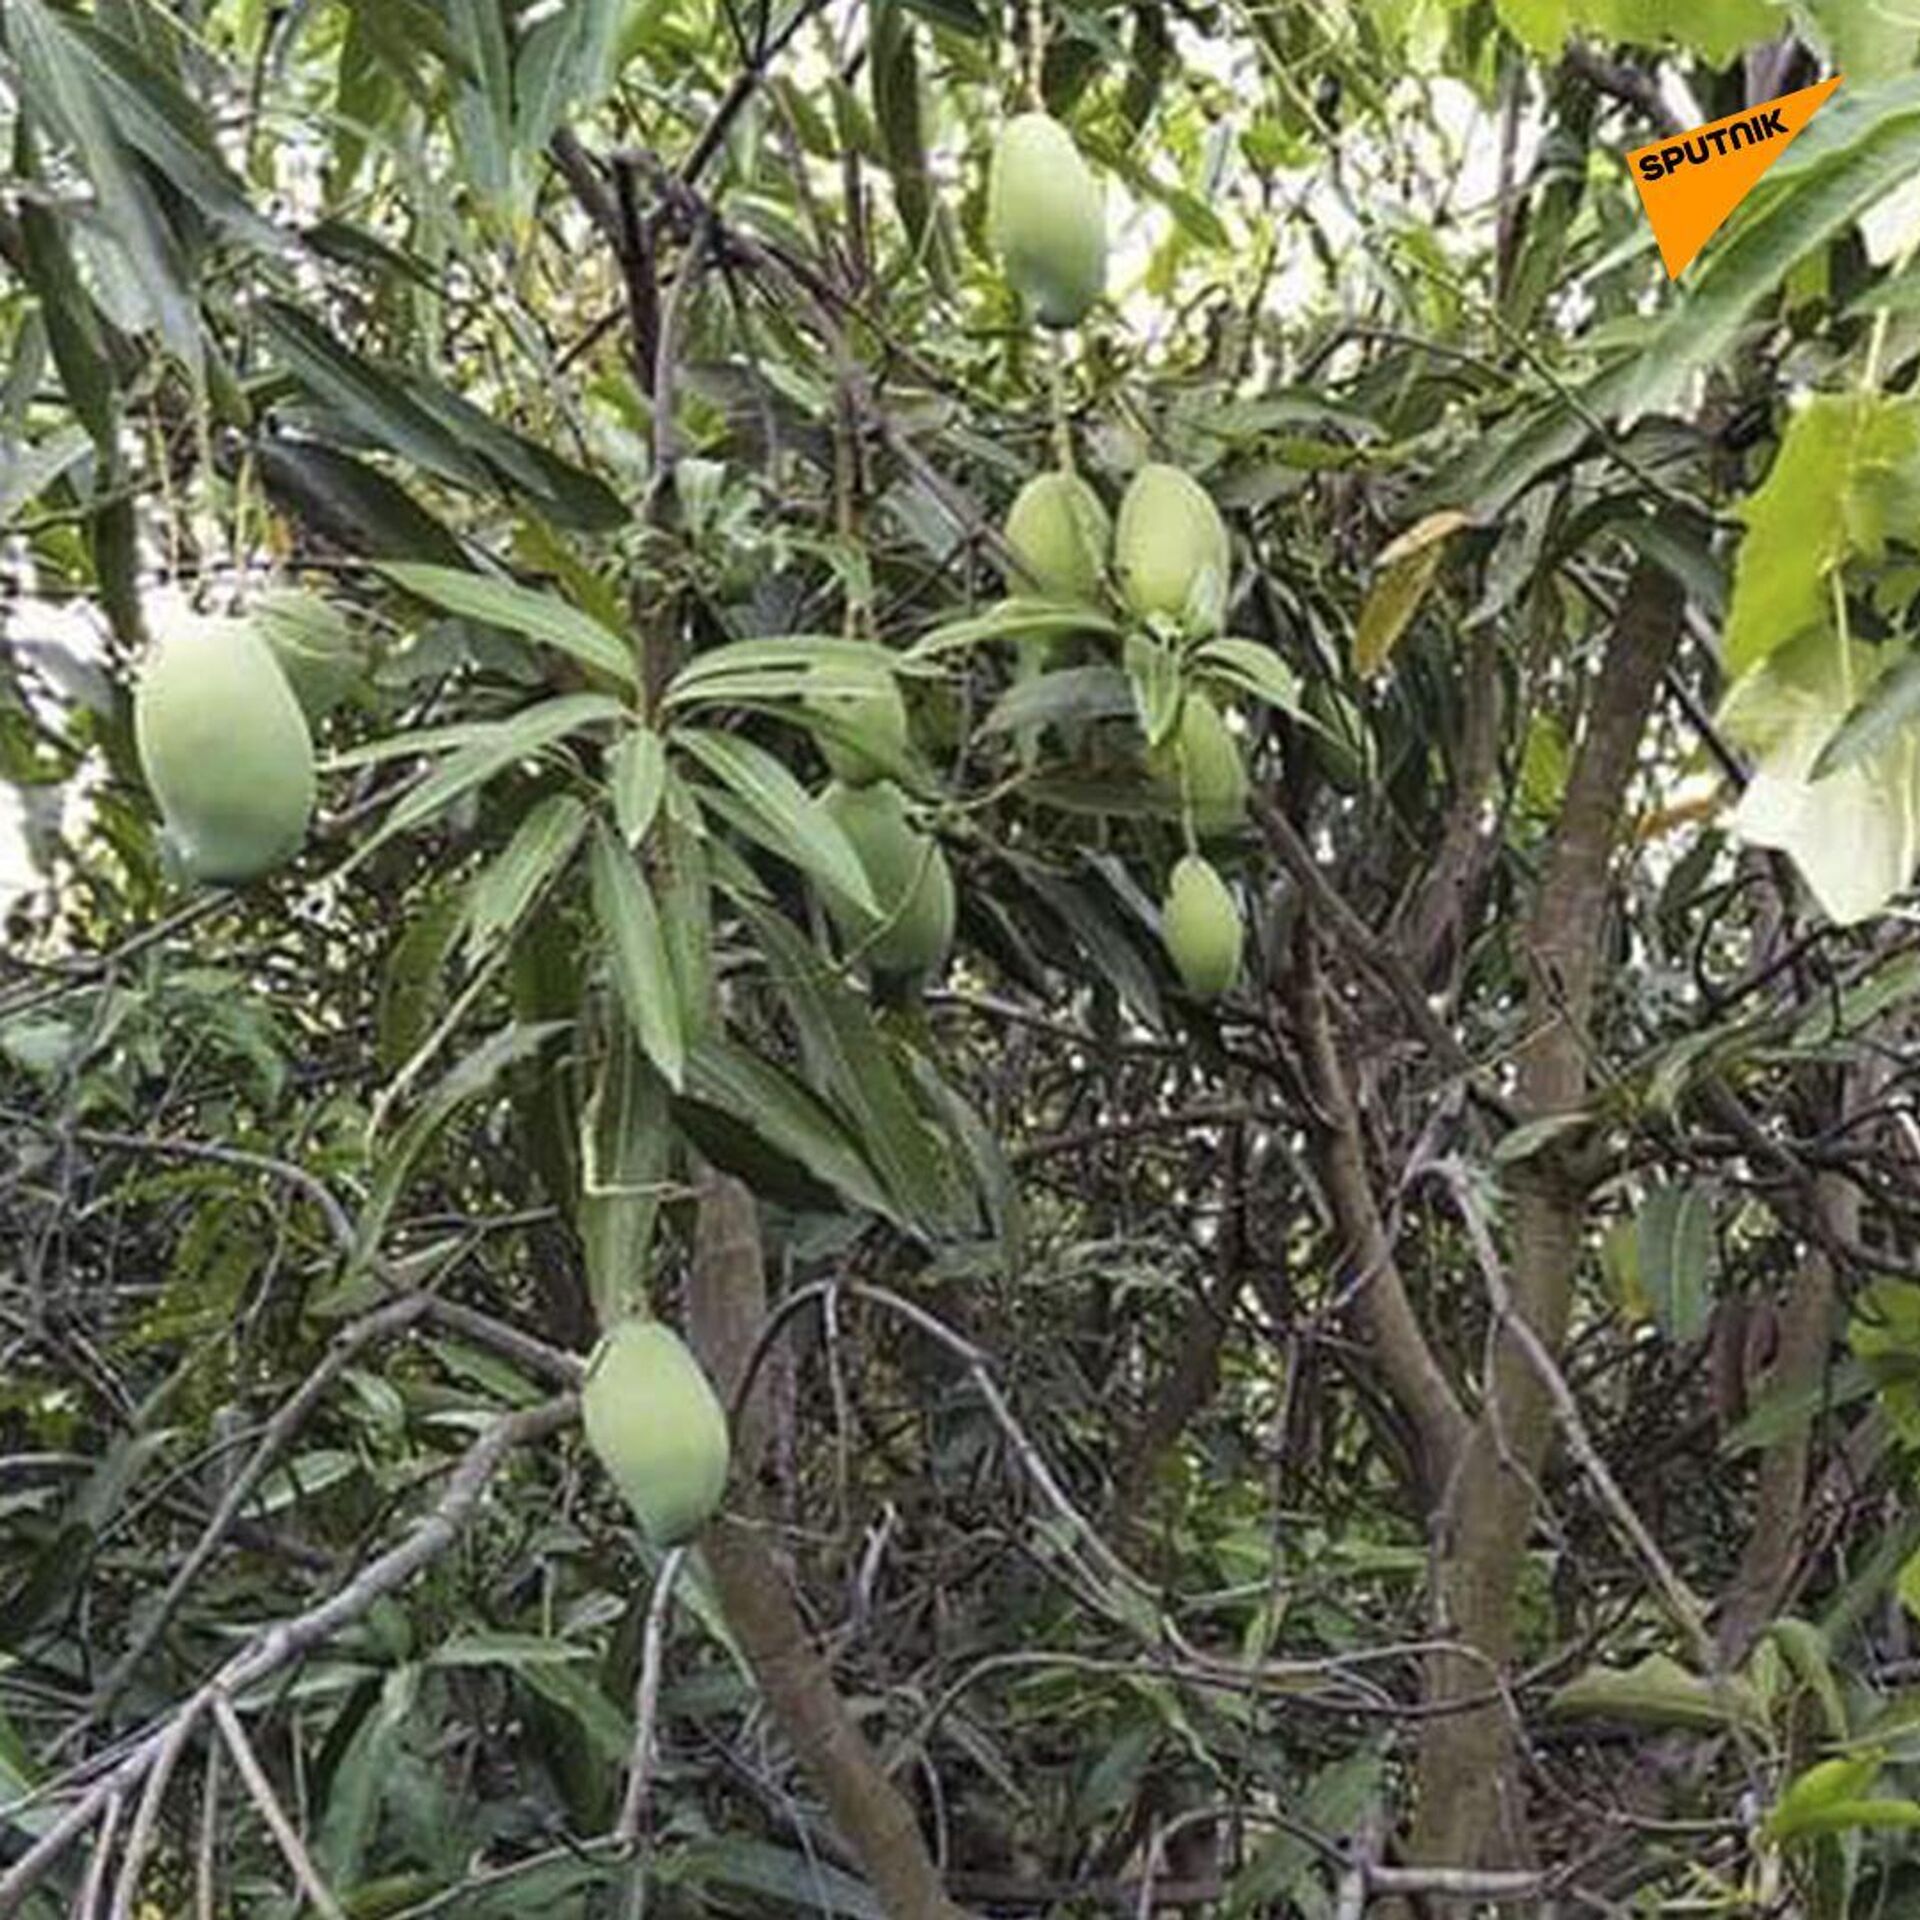 Sankalp Singh Parihar, a plantation owner from Jabalpur in Madhya Pradesh state, plants Miyazaki mangoes from Japan that sell for Rs 2.7 lakh (approx. $2,300) per kilo in the international market.  - Sputnik भारत, 1920, 19.05.2023